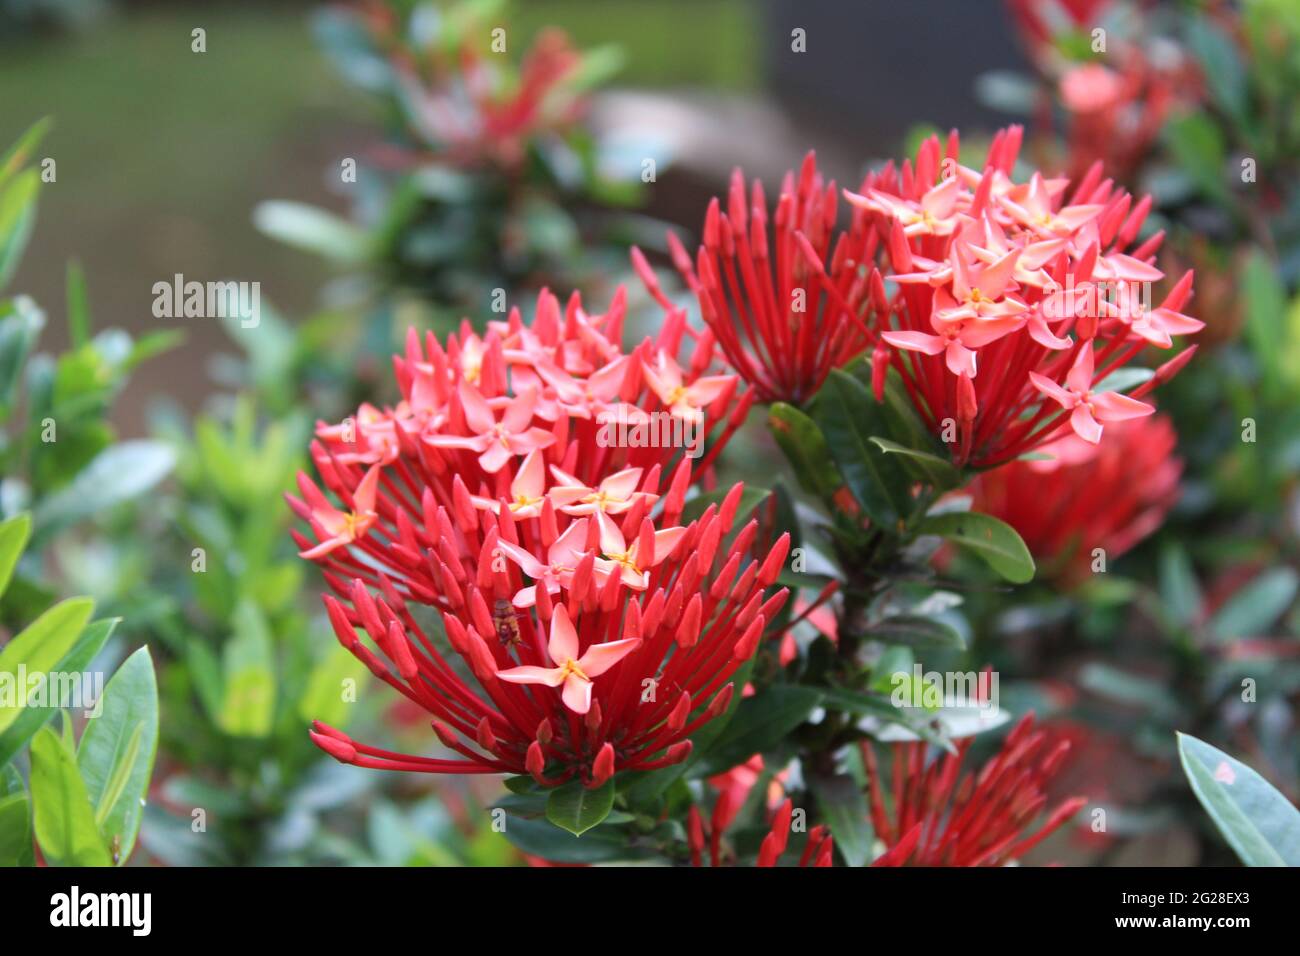 Bright Red Small Bunch of Flowers: Flame-of-the-woods (Rubiaceae) Ixora coccinea L. -- Jungle geranium, Needle flower, Jungle-geranium Stock Photo